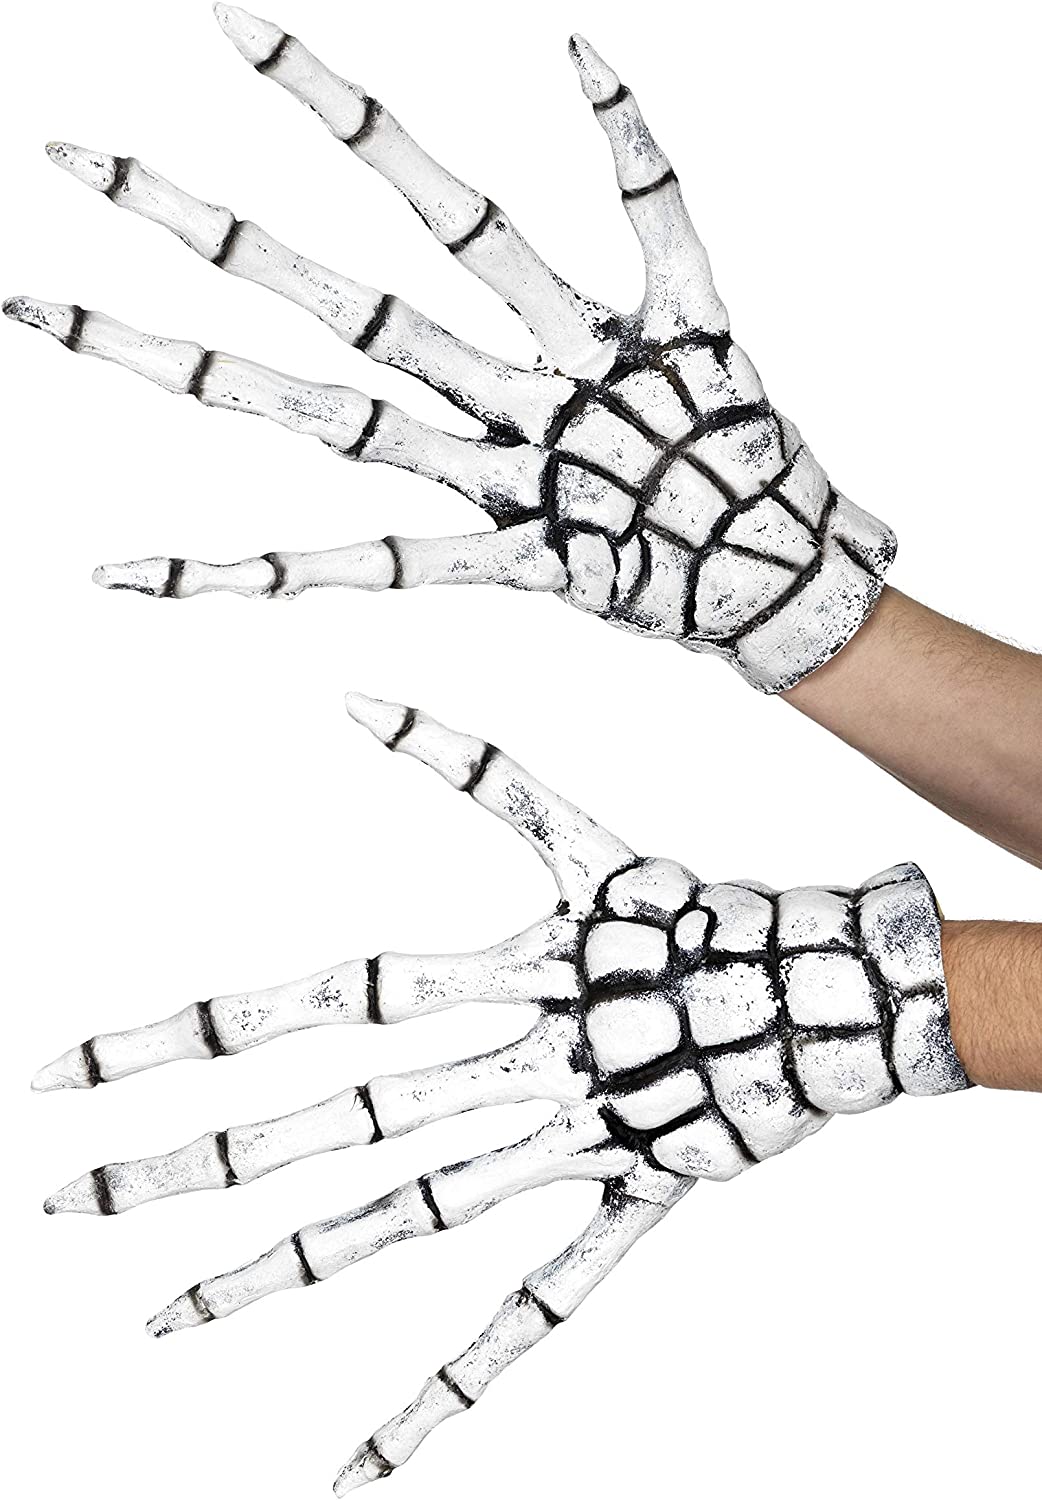 Smiffys 48181 Grim Reaper/Skeleton Gloves, White, One Size